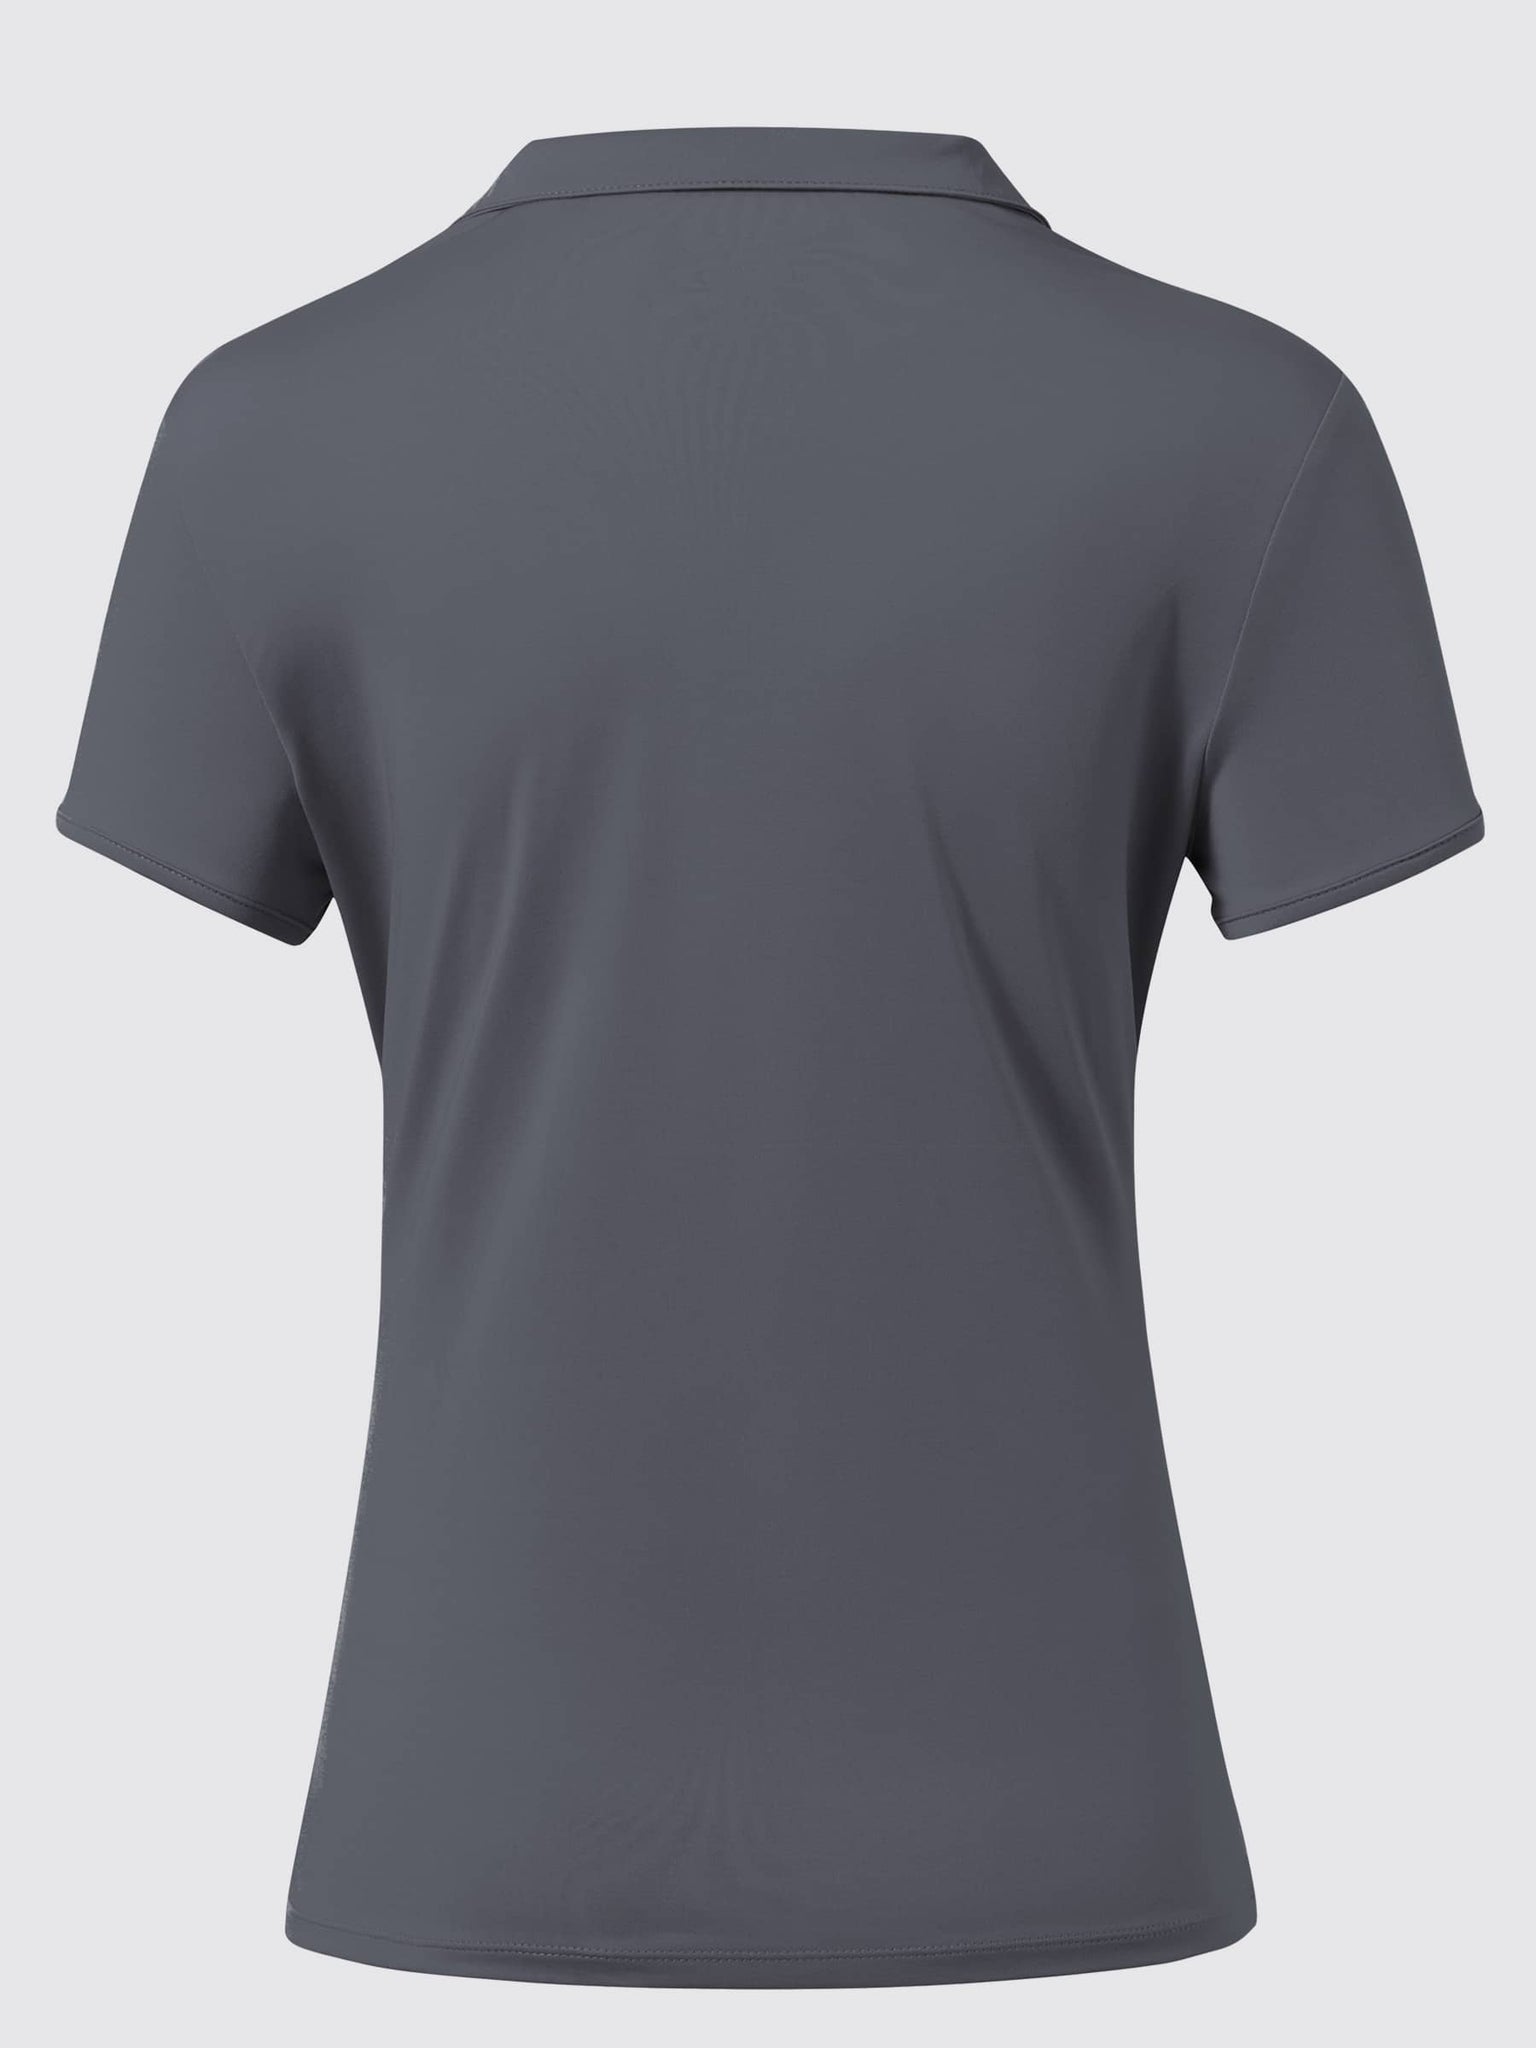 Willit Women's Golf Polo Short Sleeve Shirts_Gray3